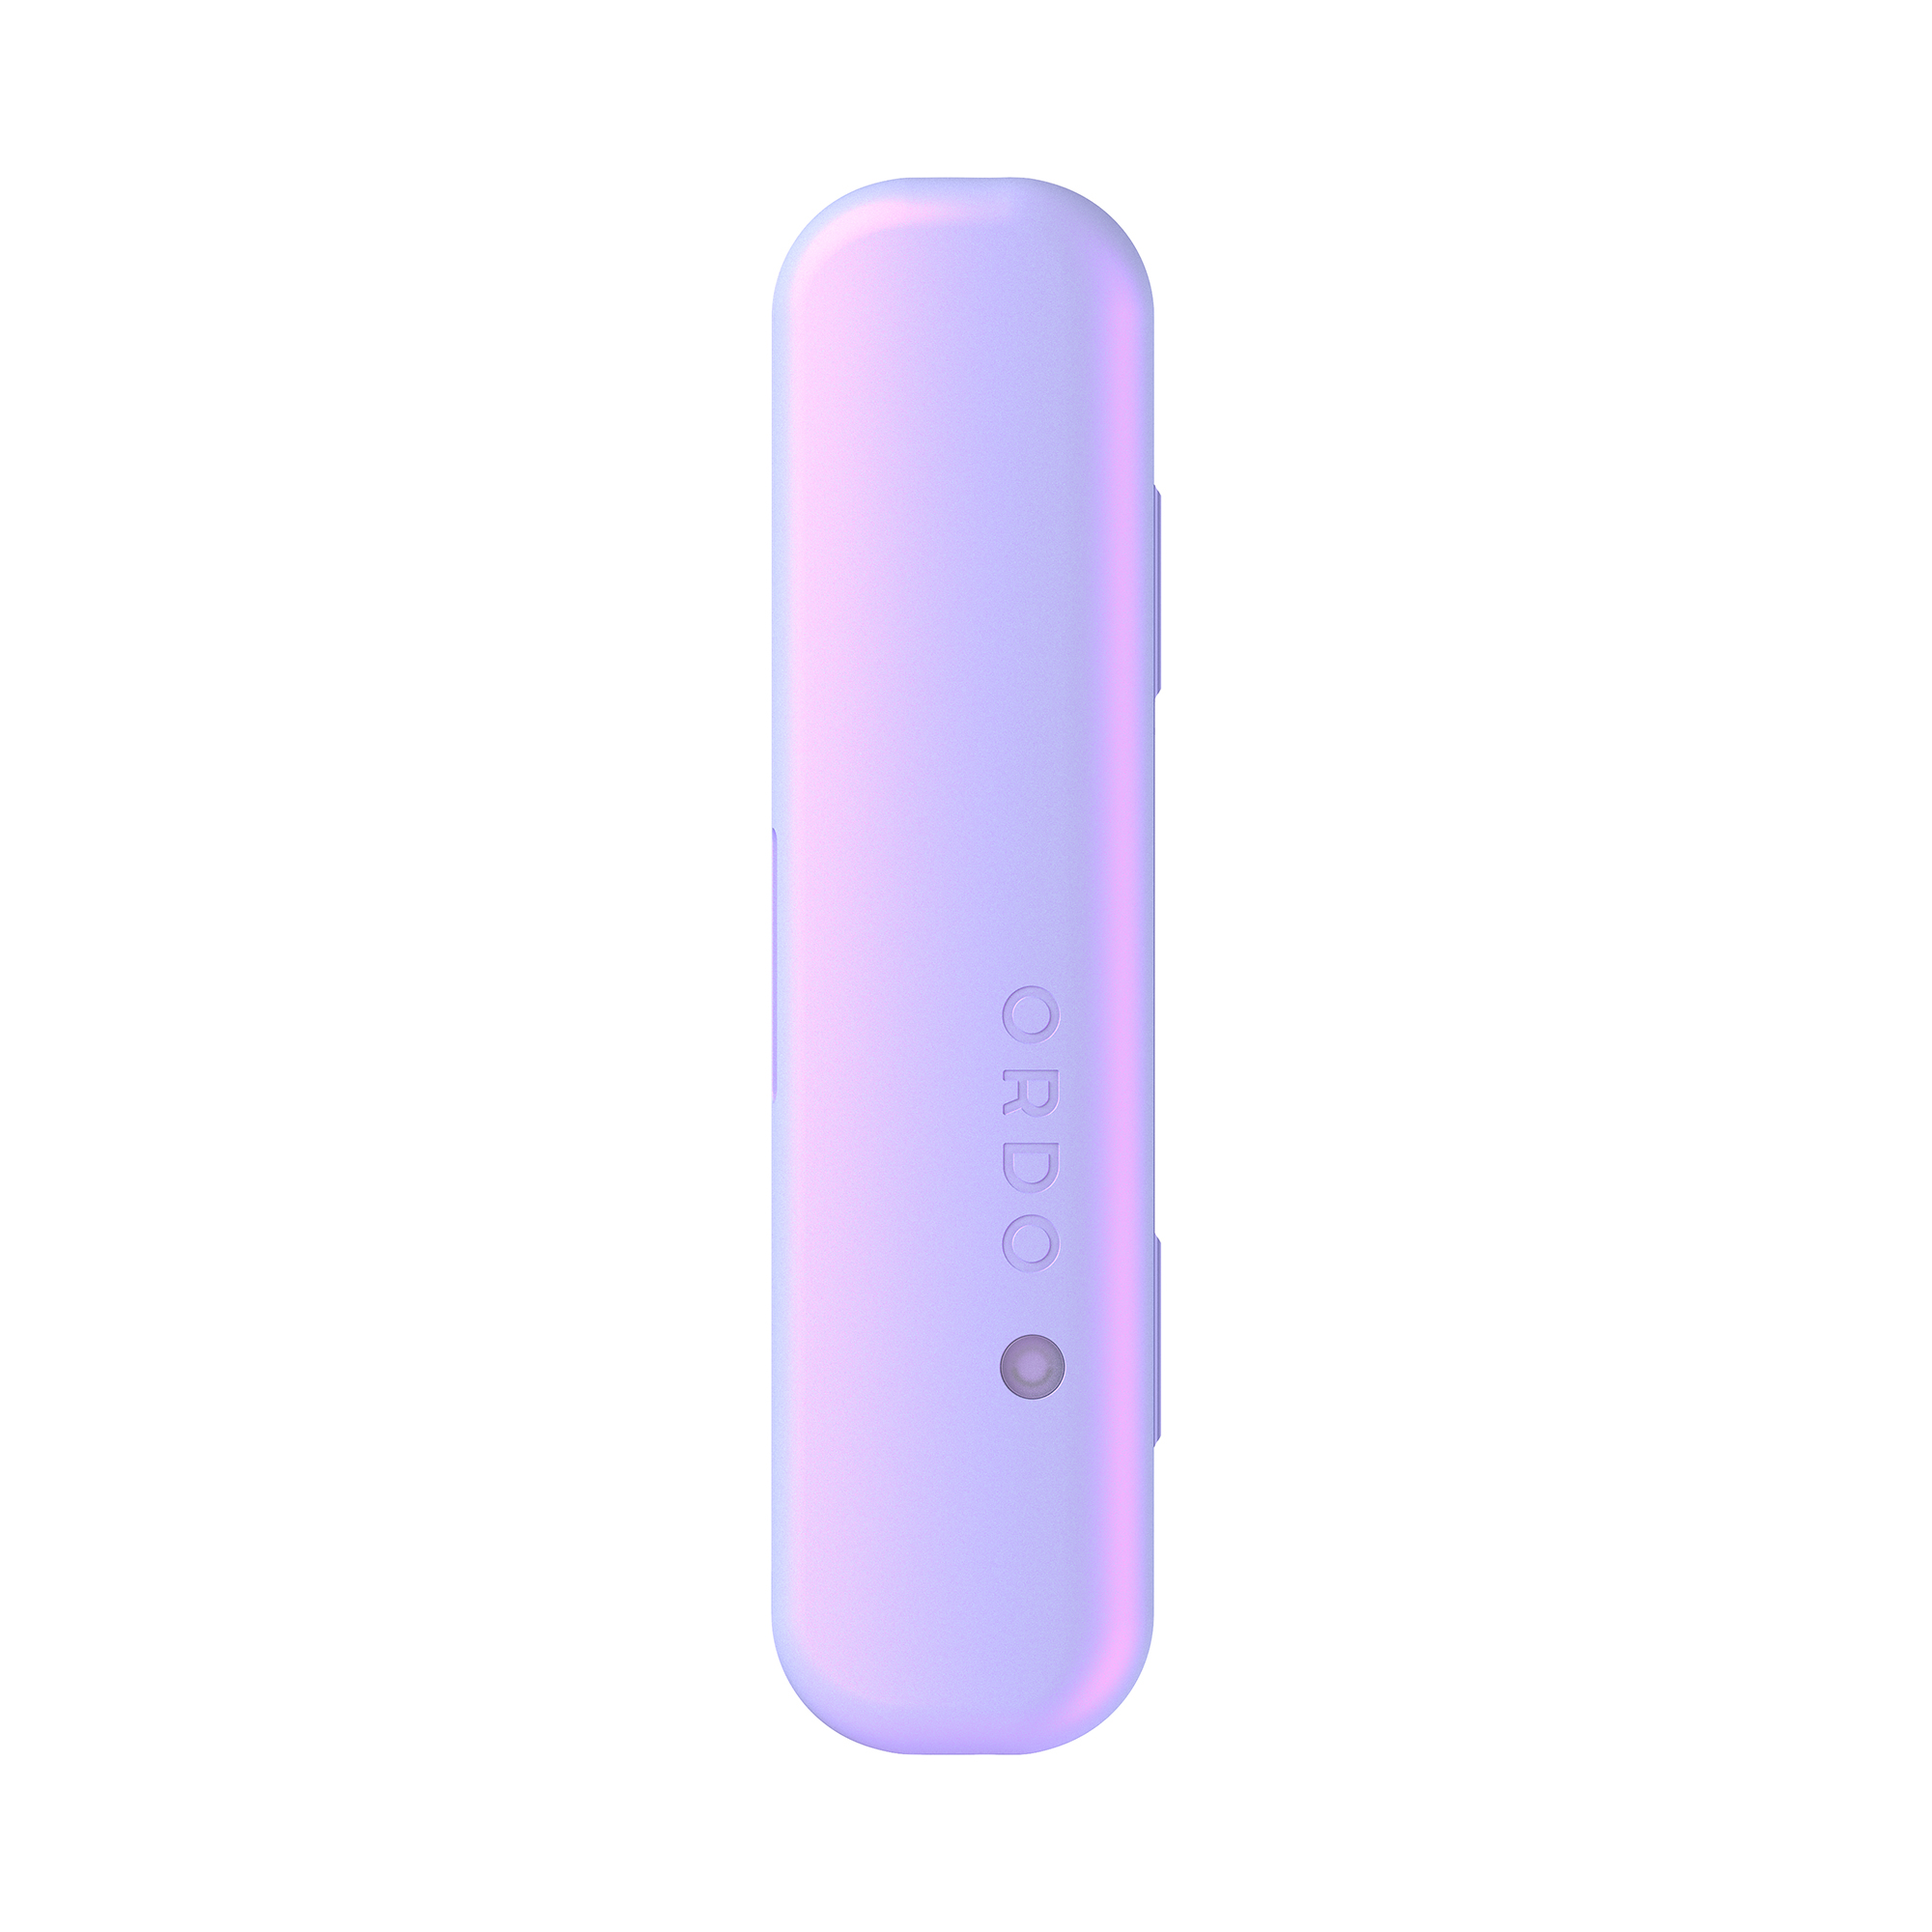 Зарядное устройство, футляр ORDO Sonic+ Charging Travel Case Pearl Violet зарядное устройство футляр ordo sonic charging travel case white